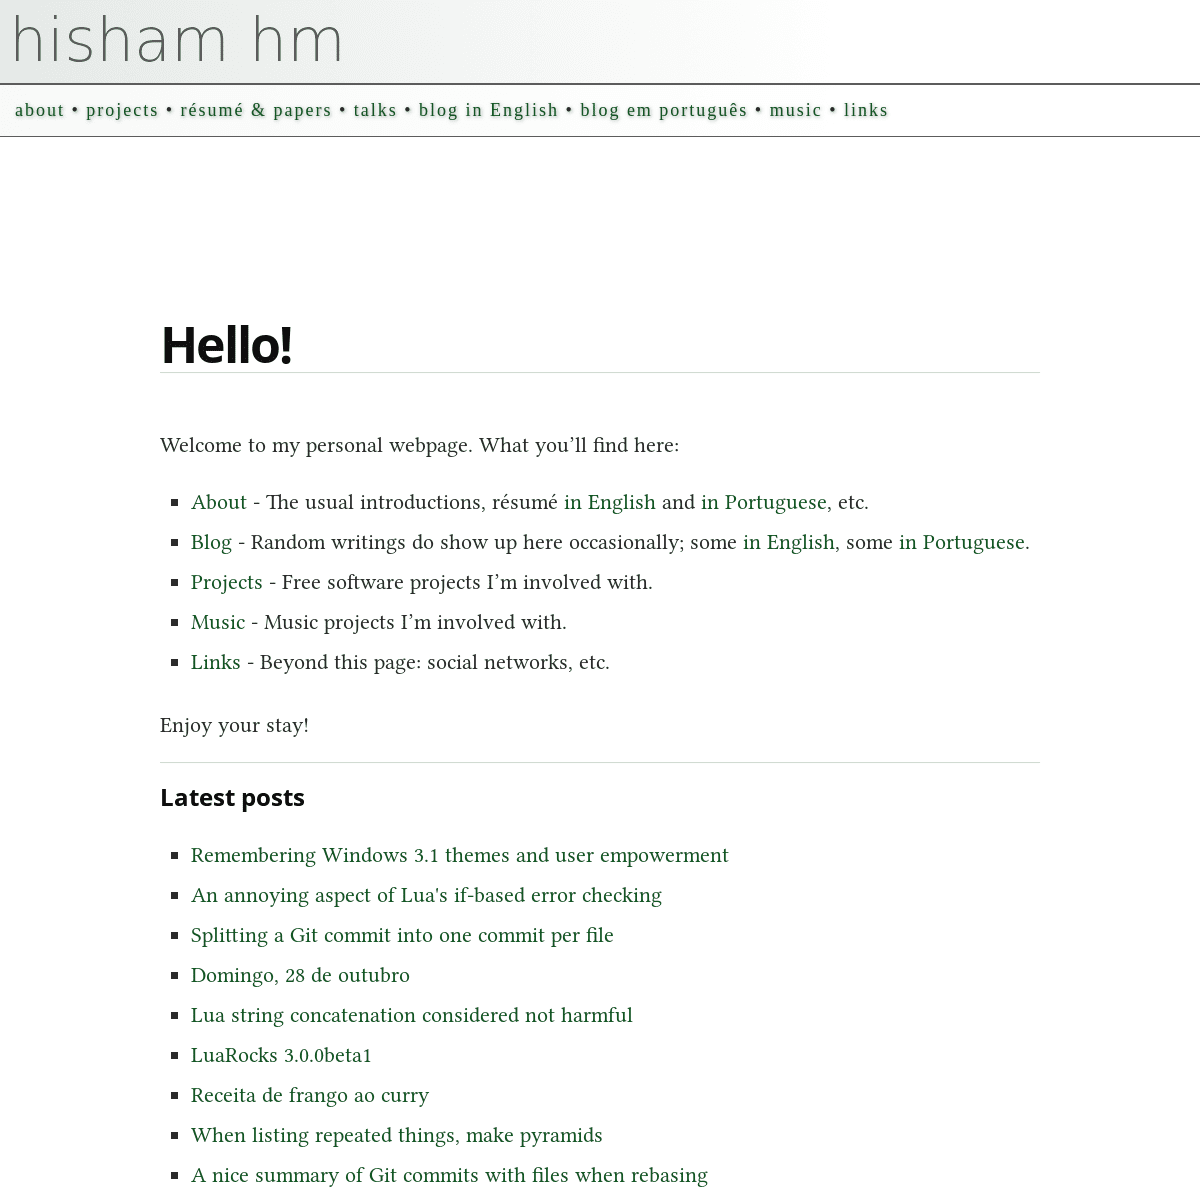 A complete backup of hisham.hm